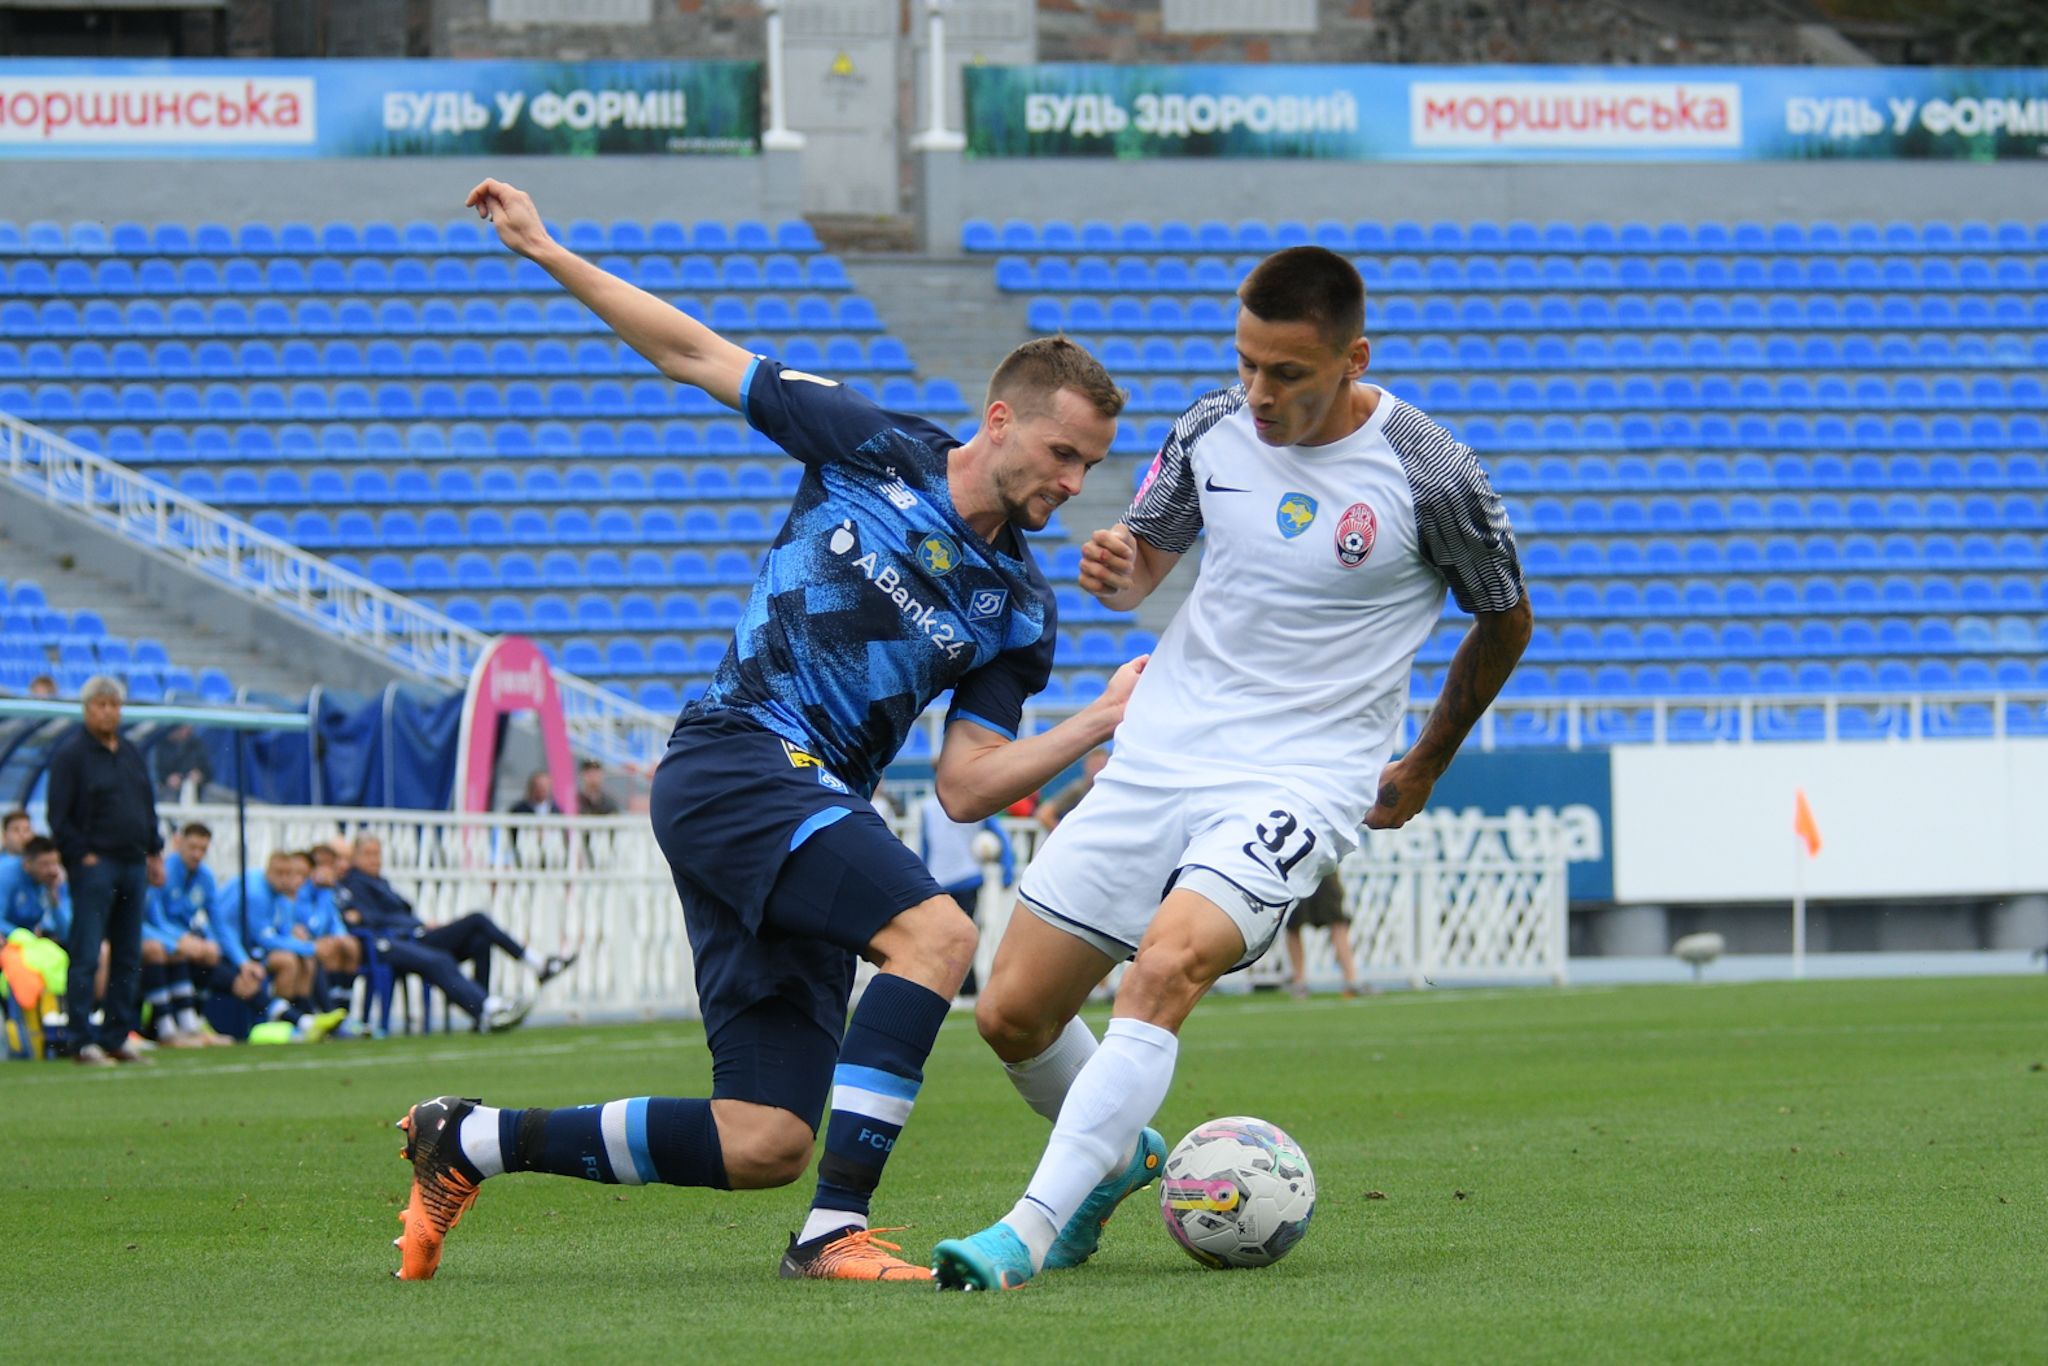 UPL. Matchday 3. Zoria – Dynamo – 3:2. Report